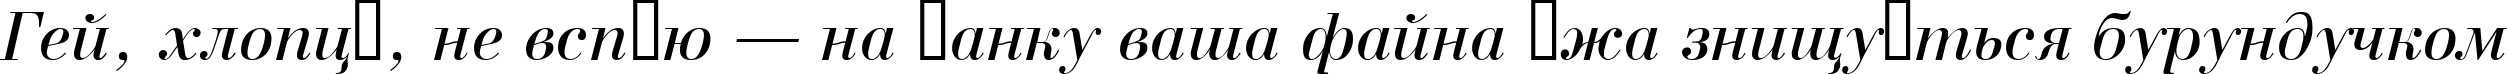 Пример написания шрифтом a_BodoniNova Italic текста на украинском